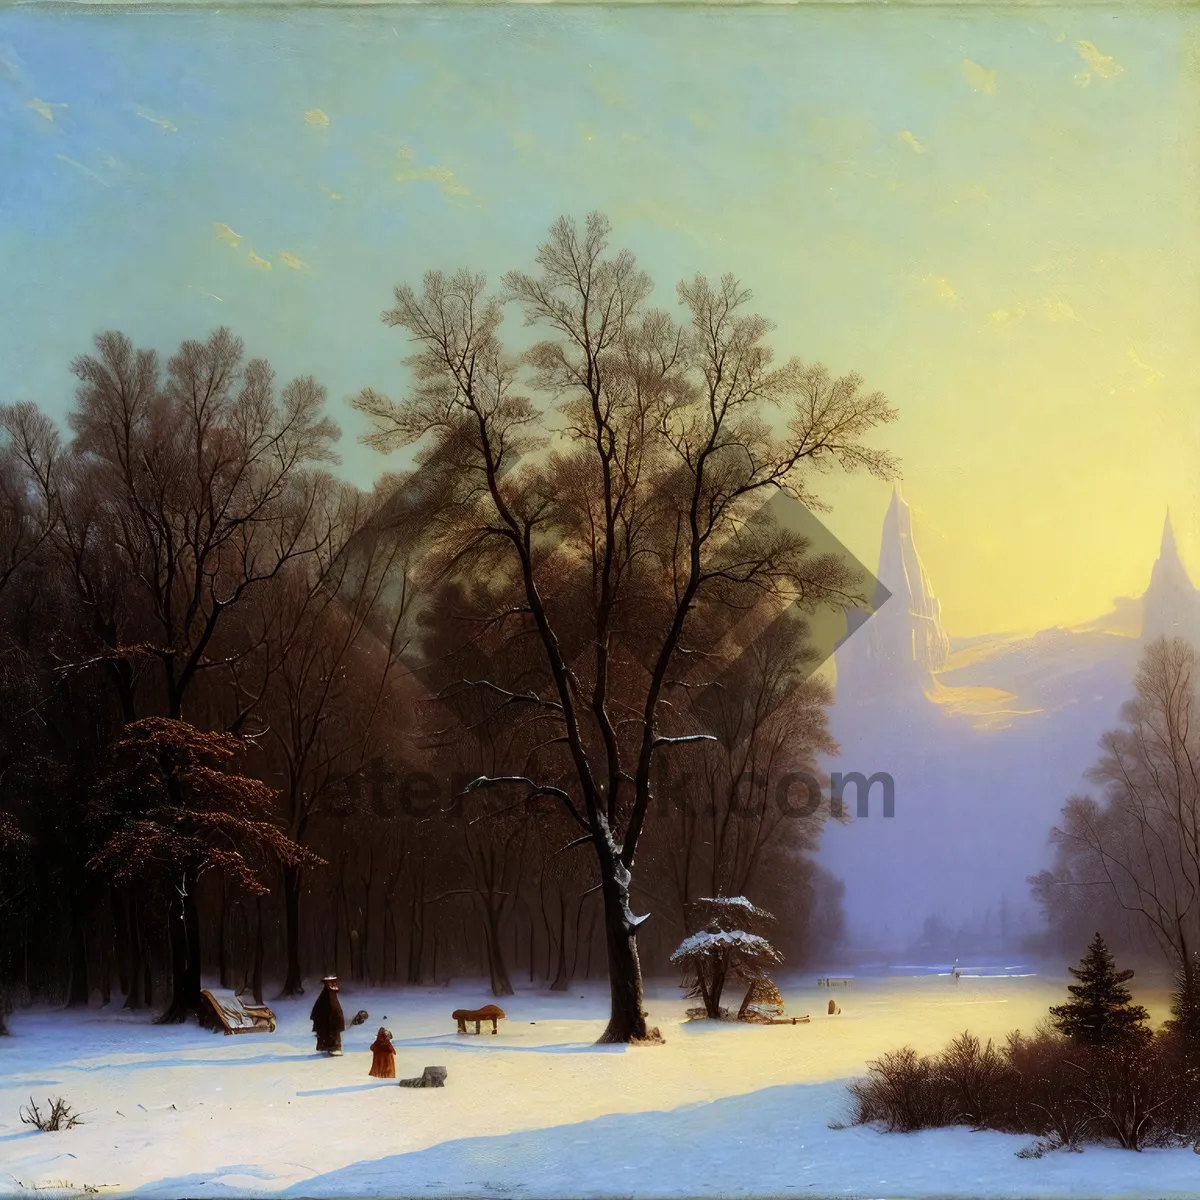 Picture of Winter Wonderland: Serene Frozen Forest Scenery